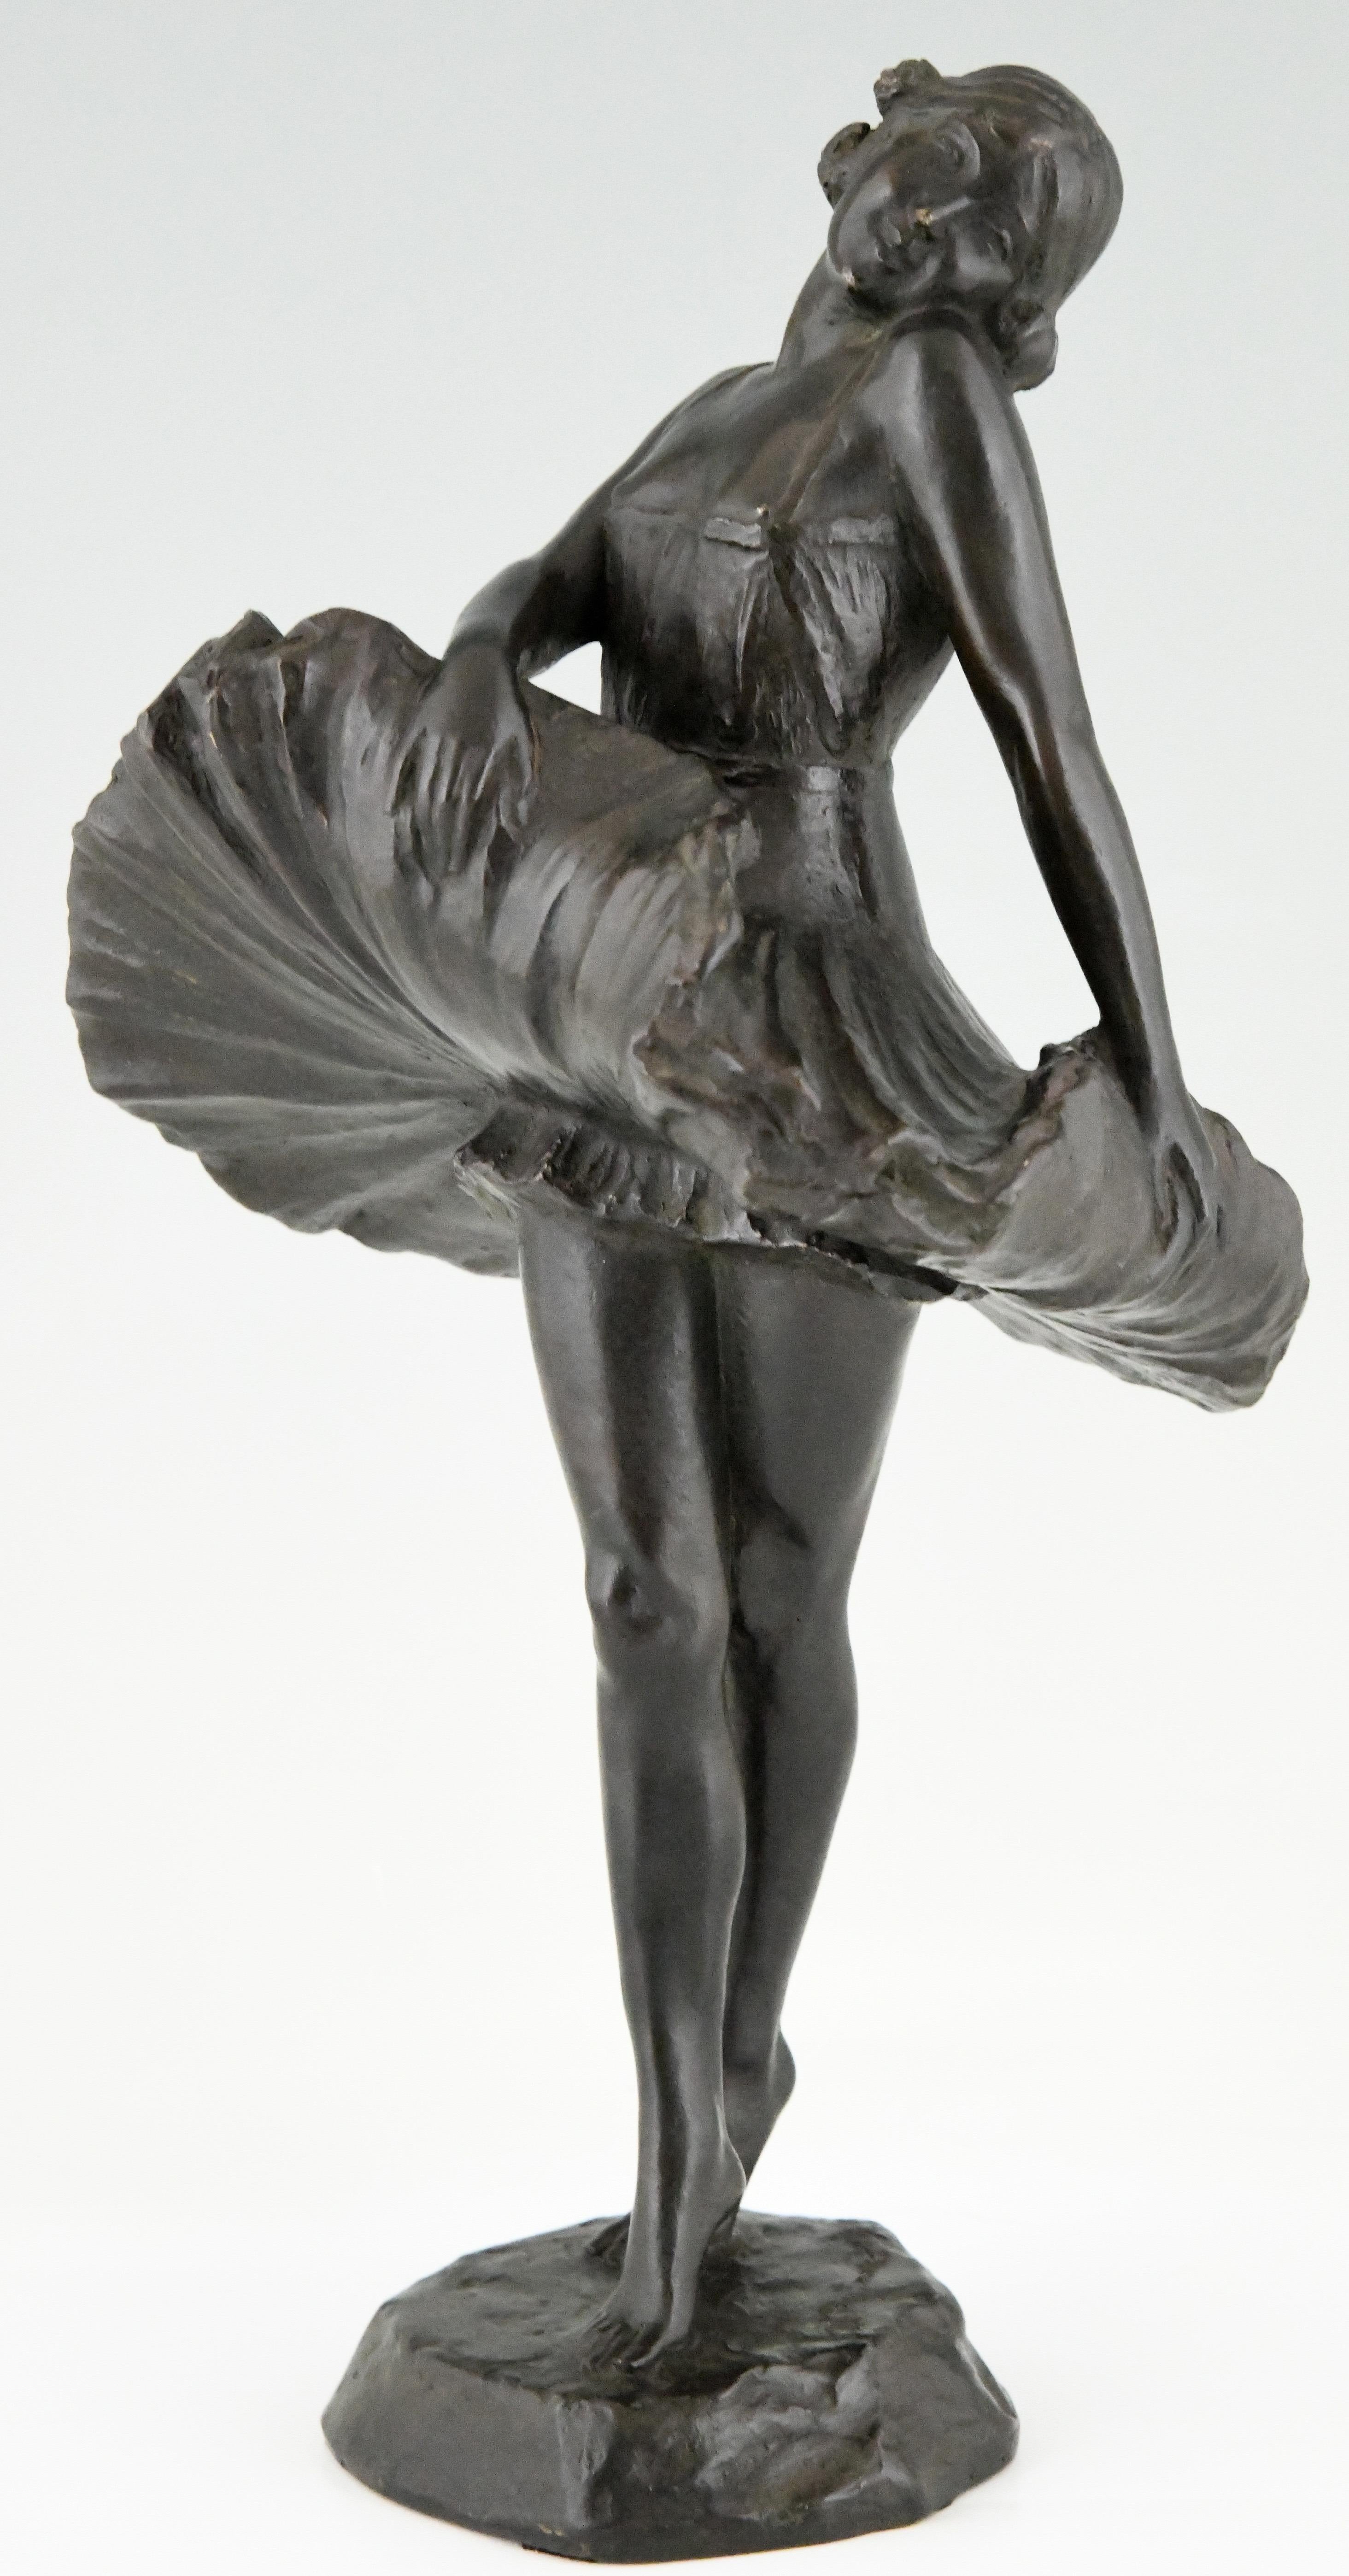 Mid-20th Century Art Deco Bronze Sculpture of a Ballerina Enrico Manfredo Di Palma-Falco  1930